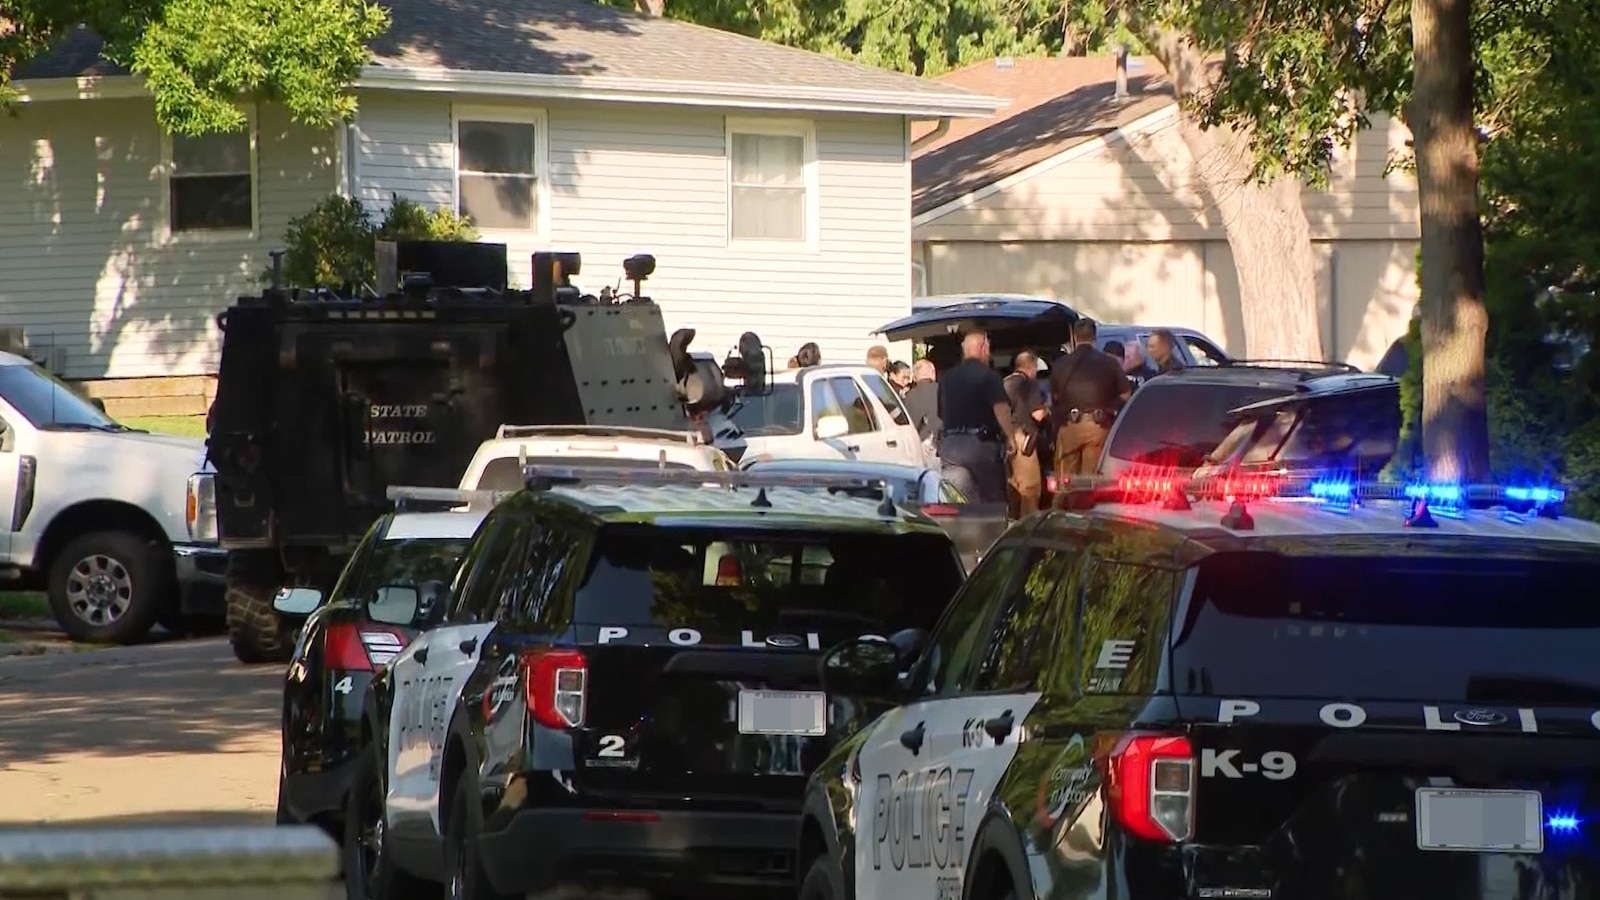 3 children, 3 adults shot inside Nebraska home: Police